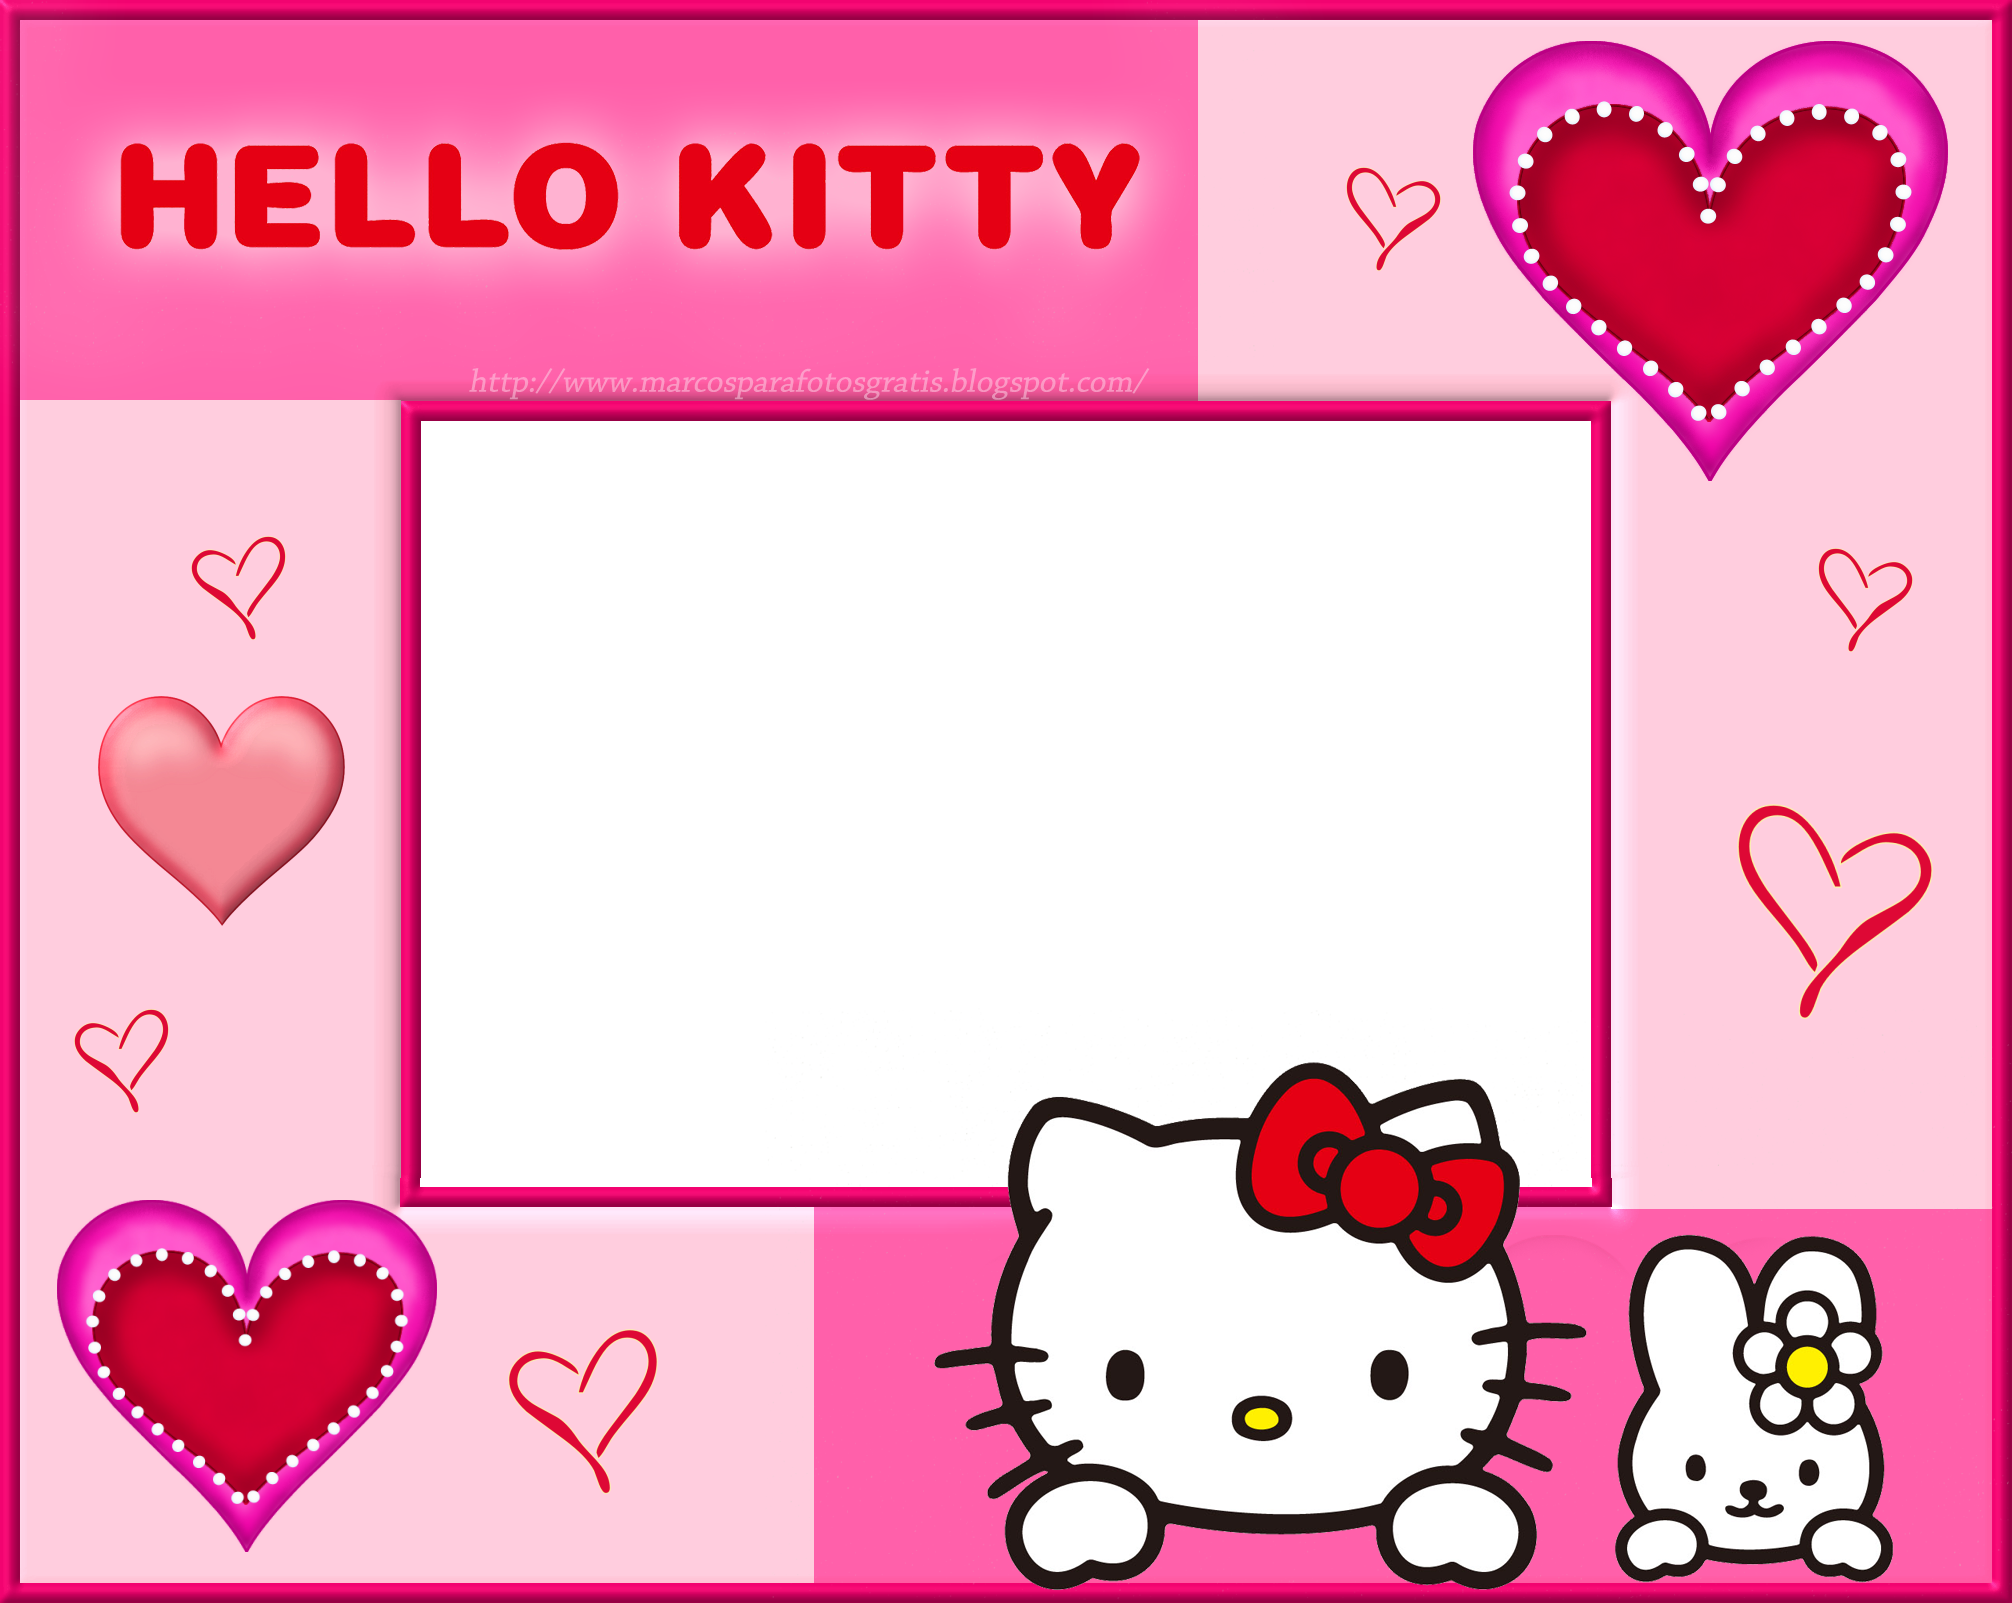 Hello Kitty Wallpapers 2015